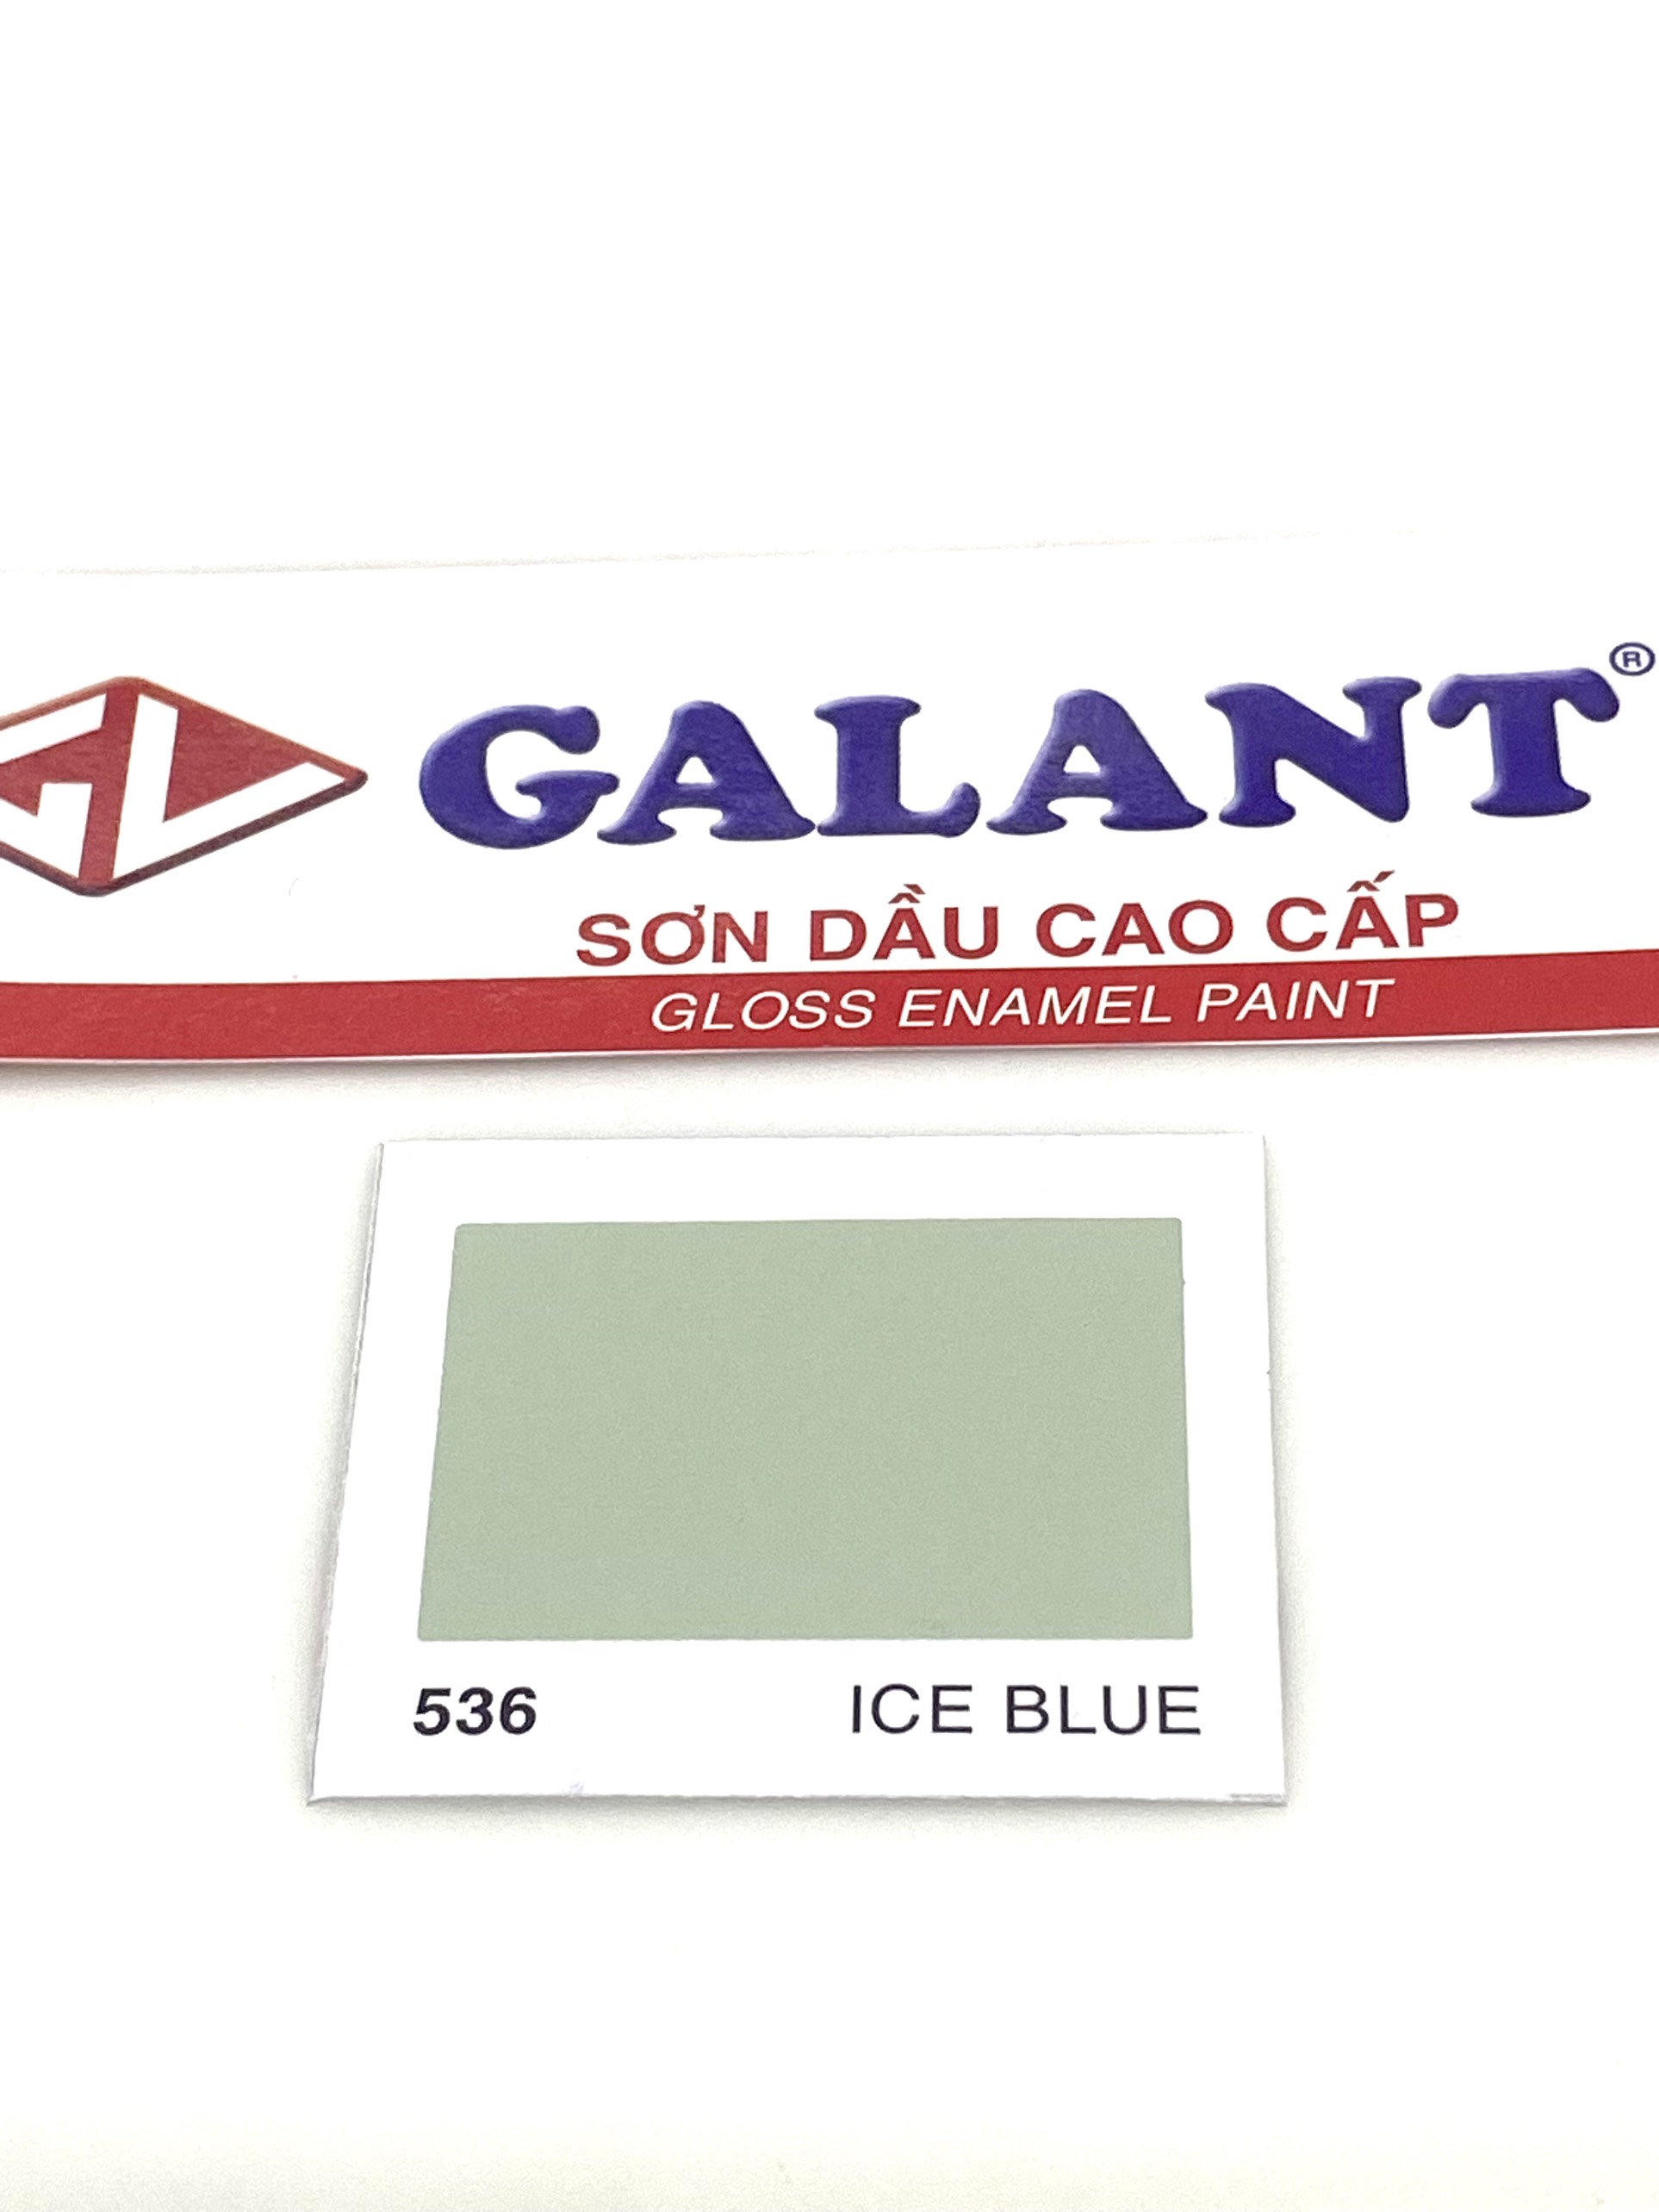 Sơn dầu Galant màu Ice Blue 536 _ 0.8L